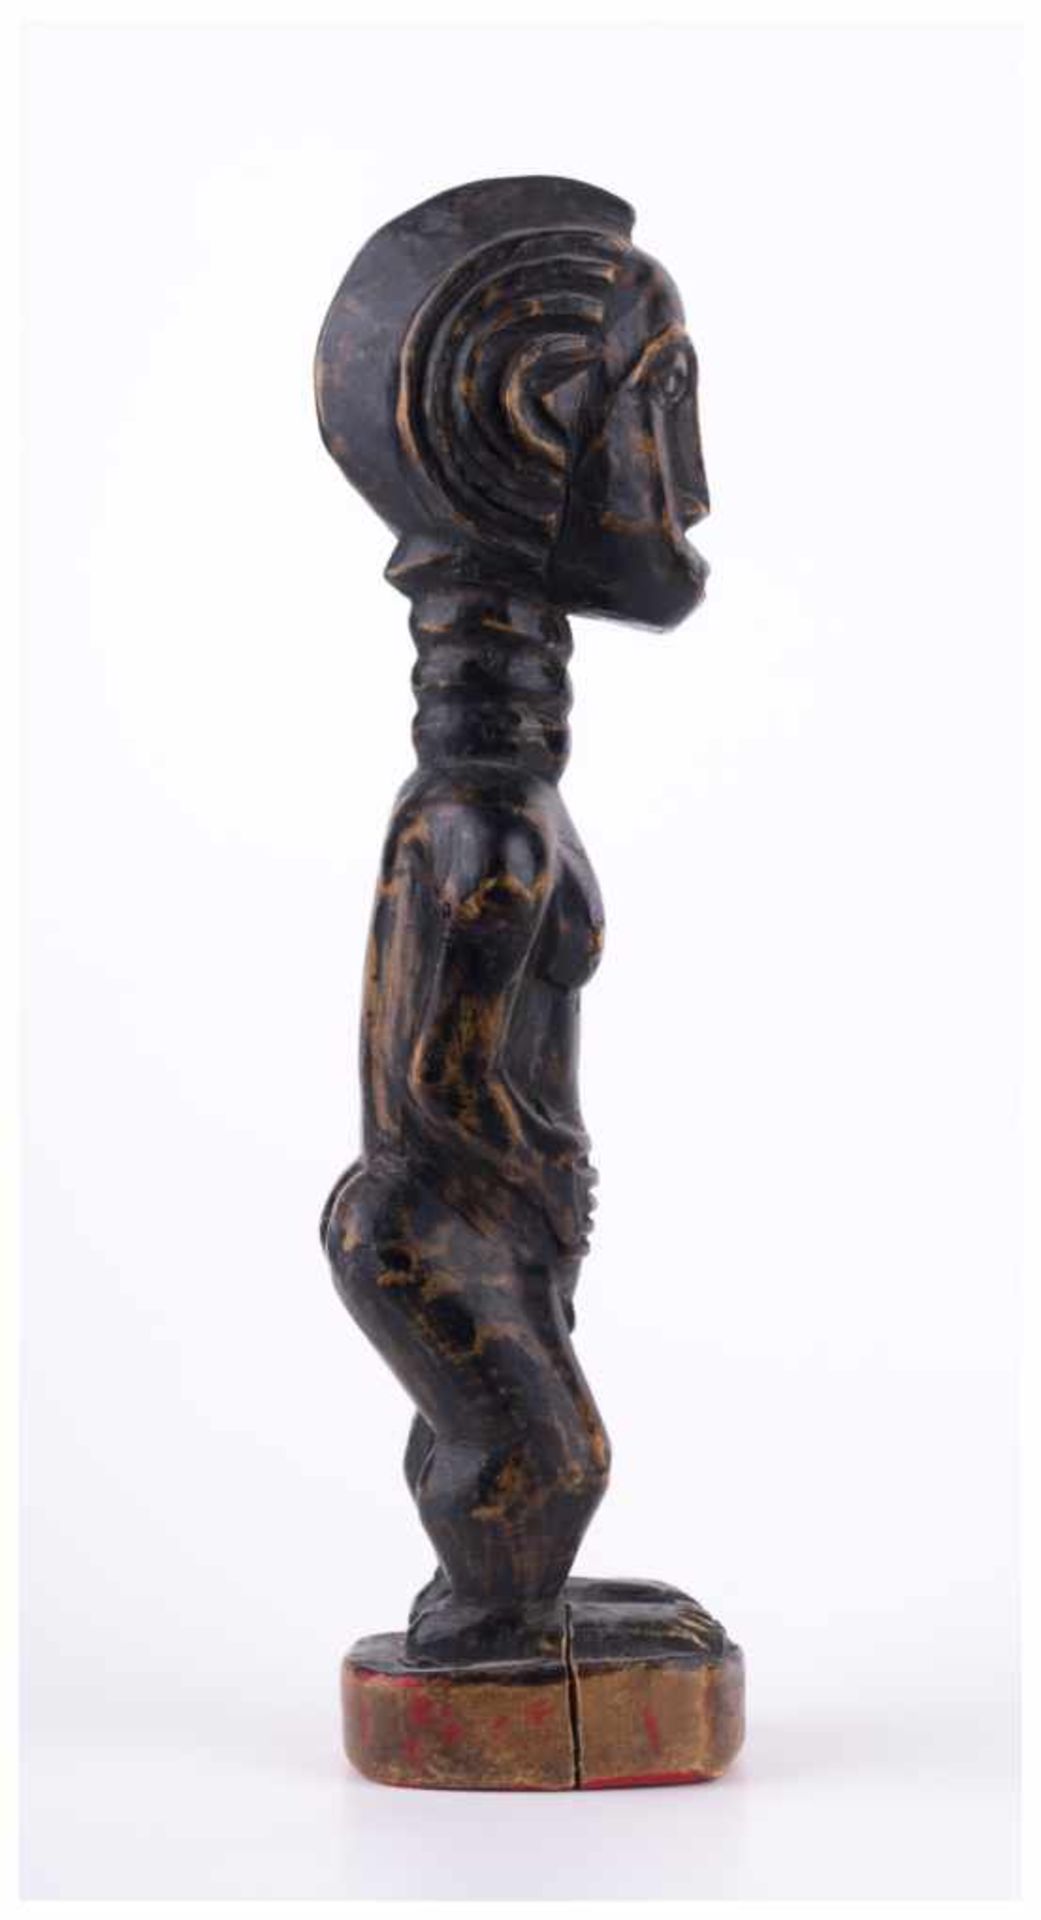 Fruchtbarkeits-Figur Afrika / Fertility figure, Africa - Holz, H: 27,5 cm - [...] - Image 6 of 8